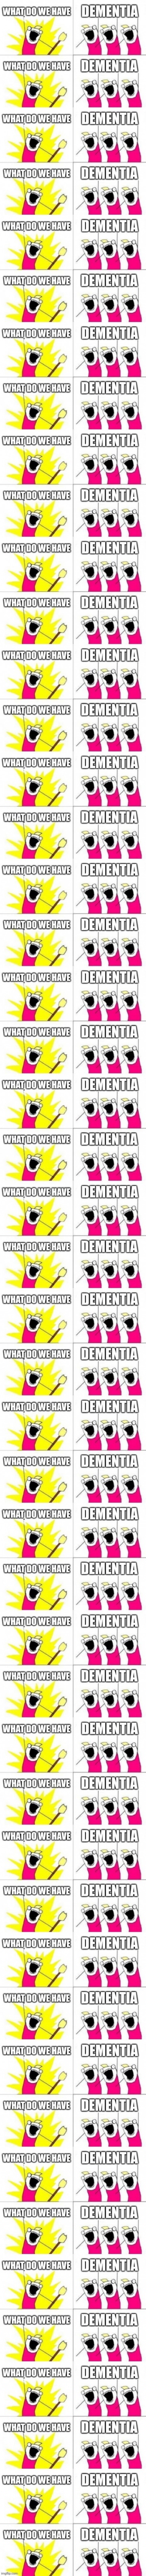 Dementia | image tagged in dementia | made w/ Imgflip meme maker